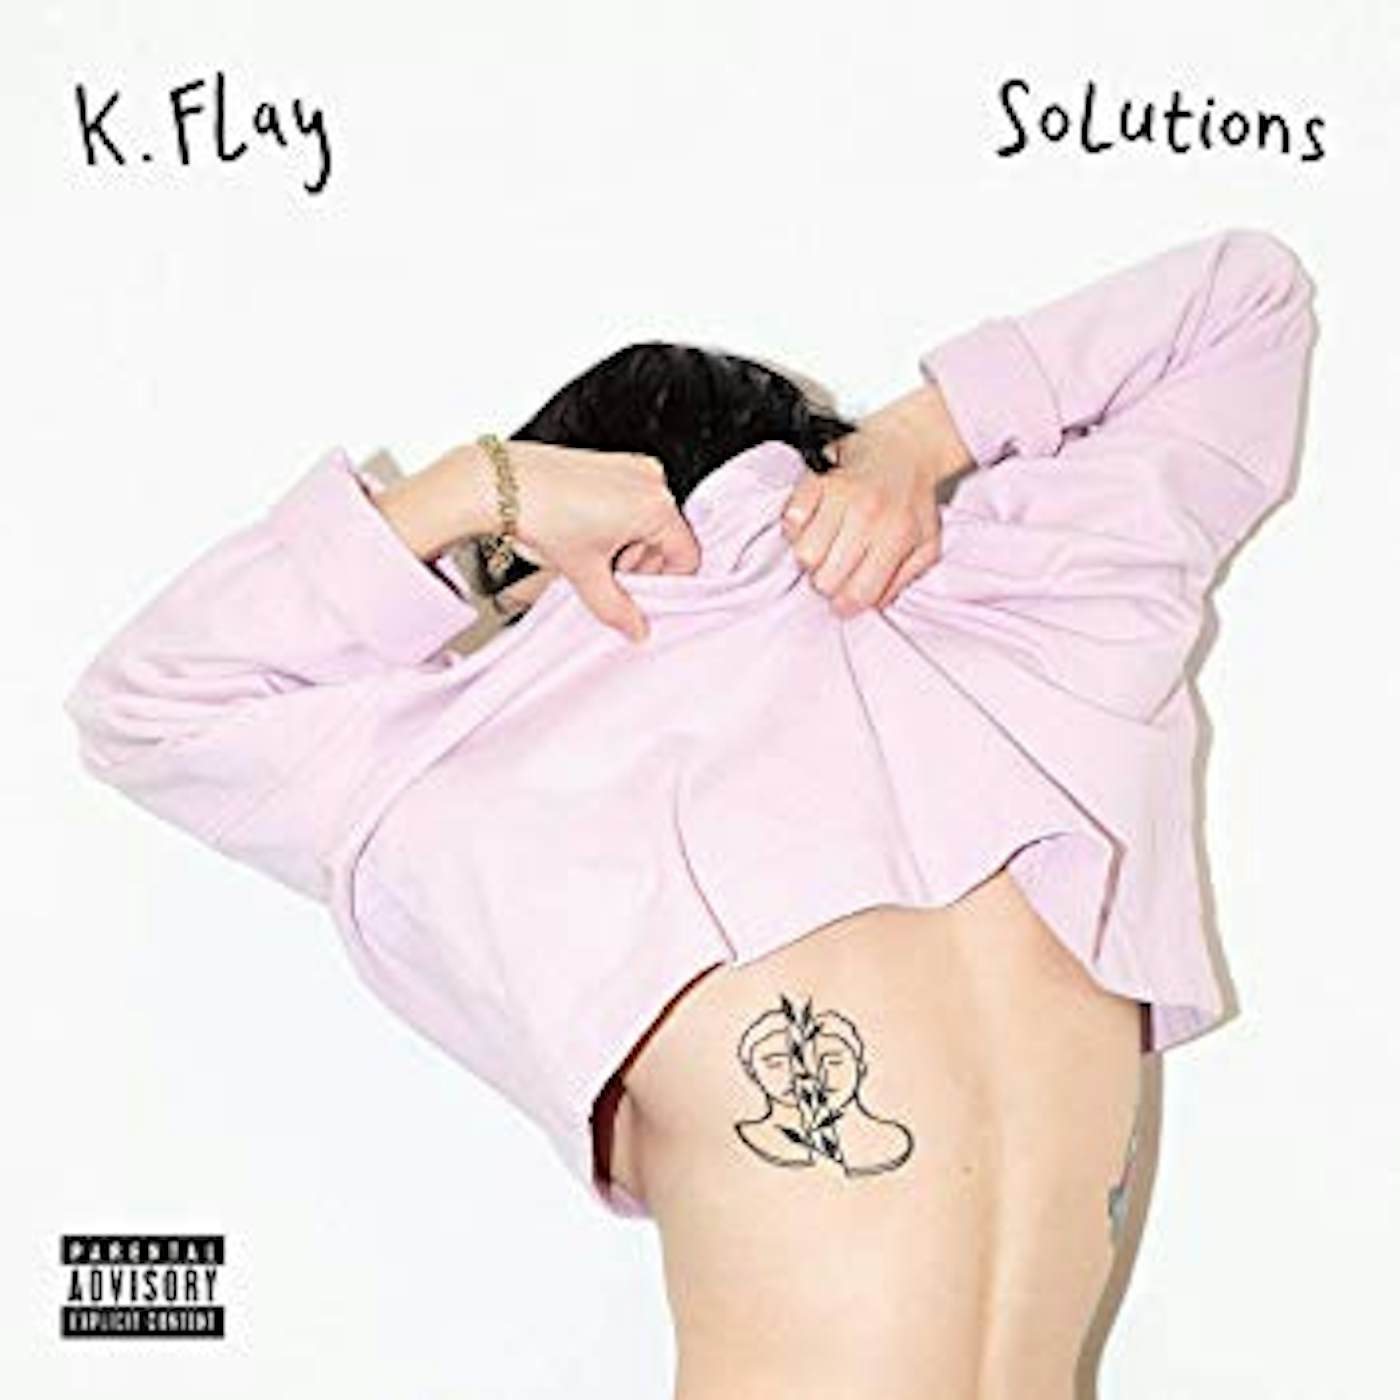 K.Flay Solutions Vinyl Record